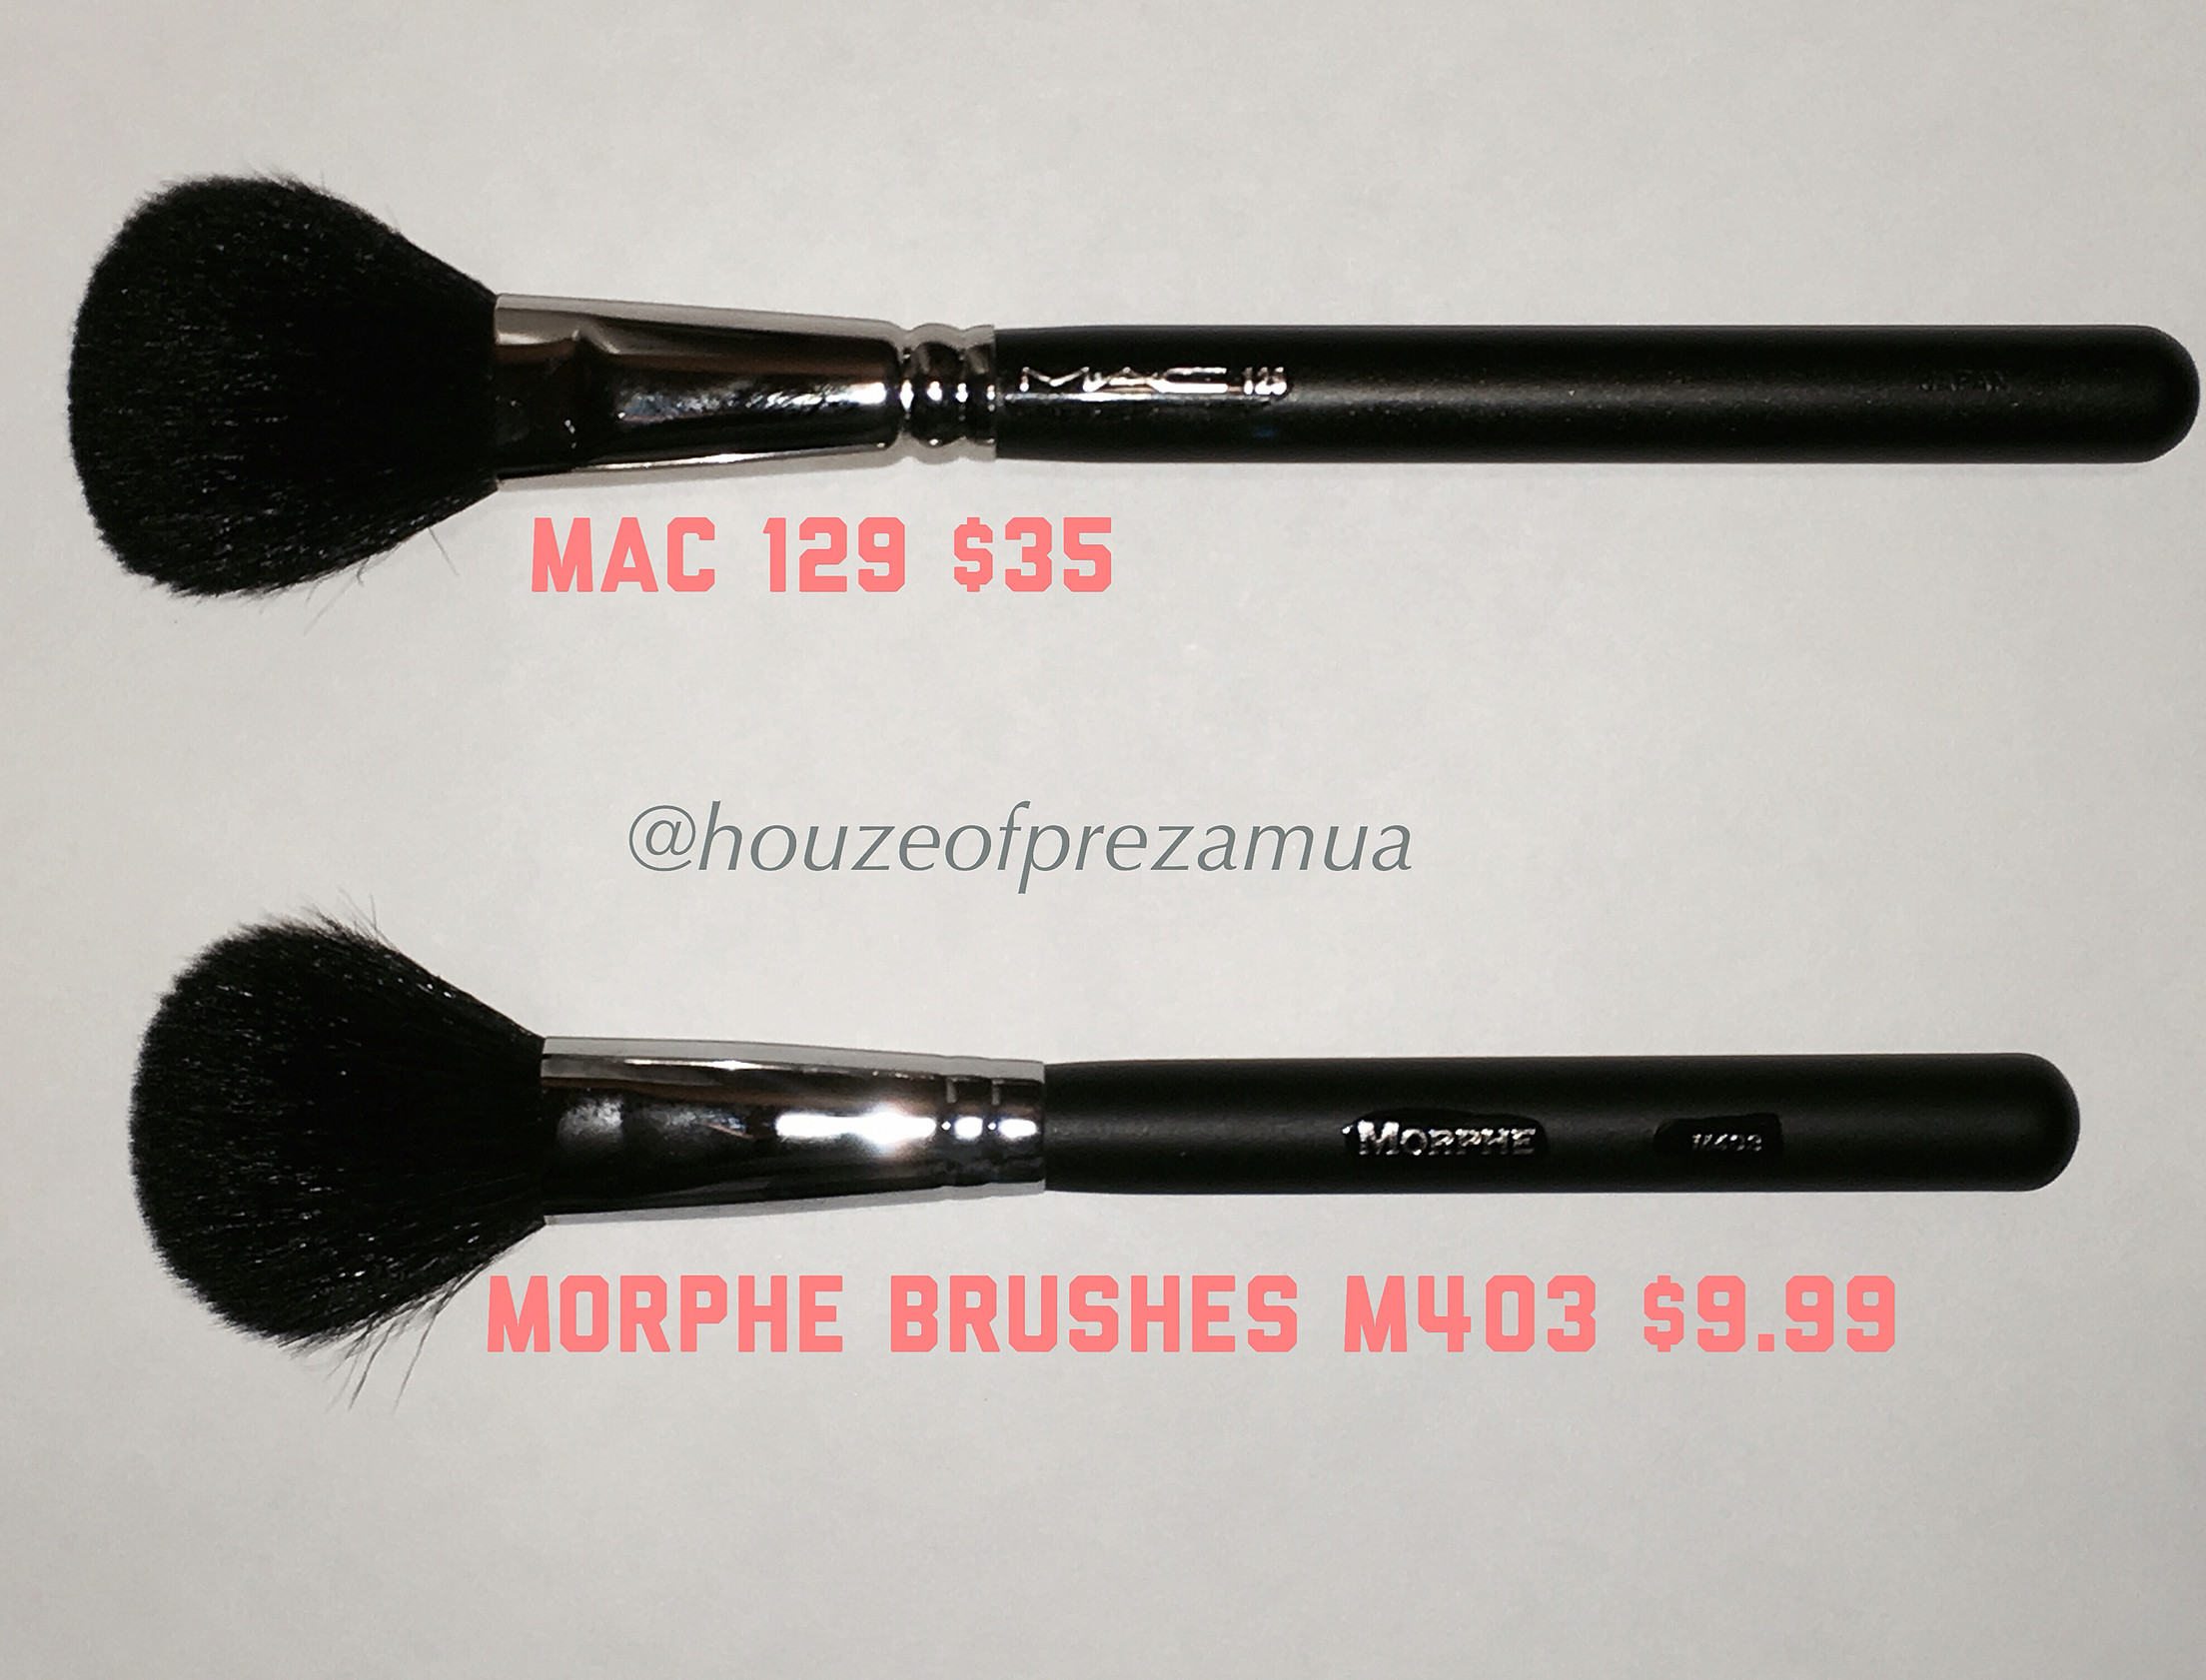 2208x1682 MAC 129 brush dupe. Morphe Brushes M403 brush.